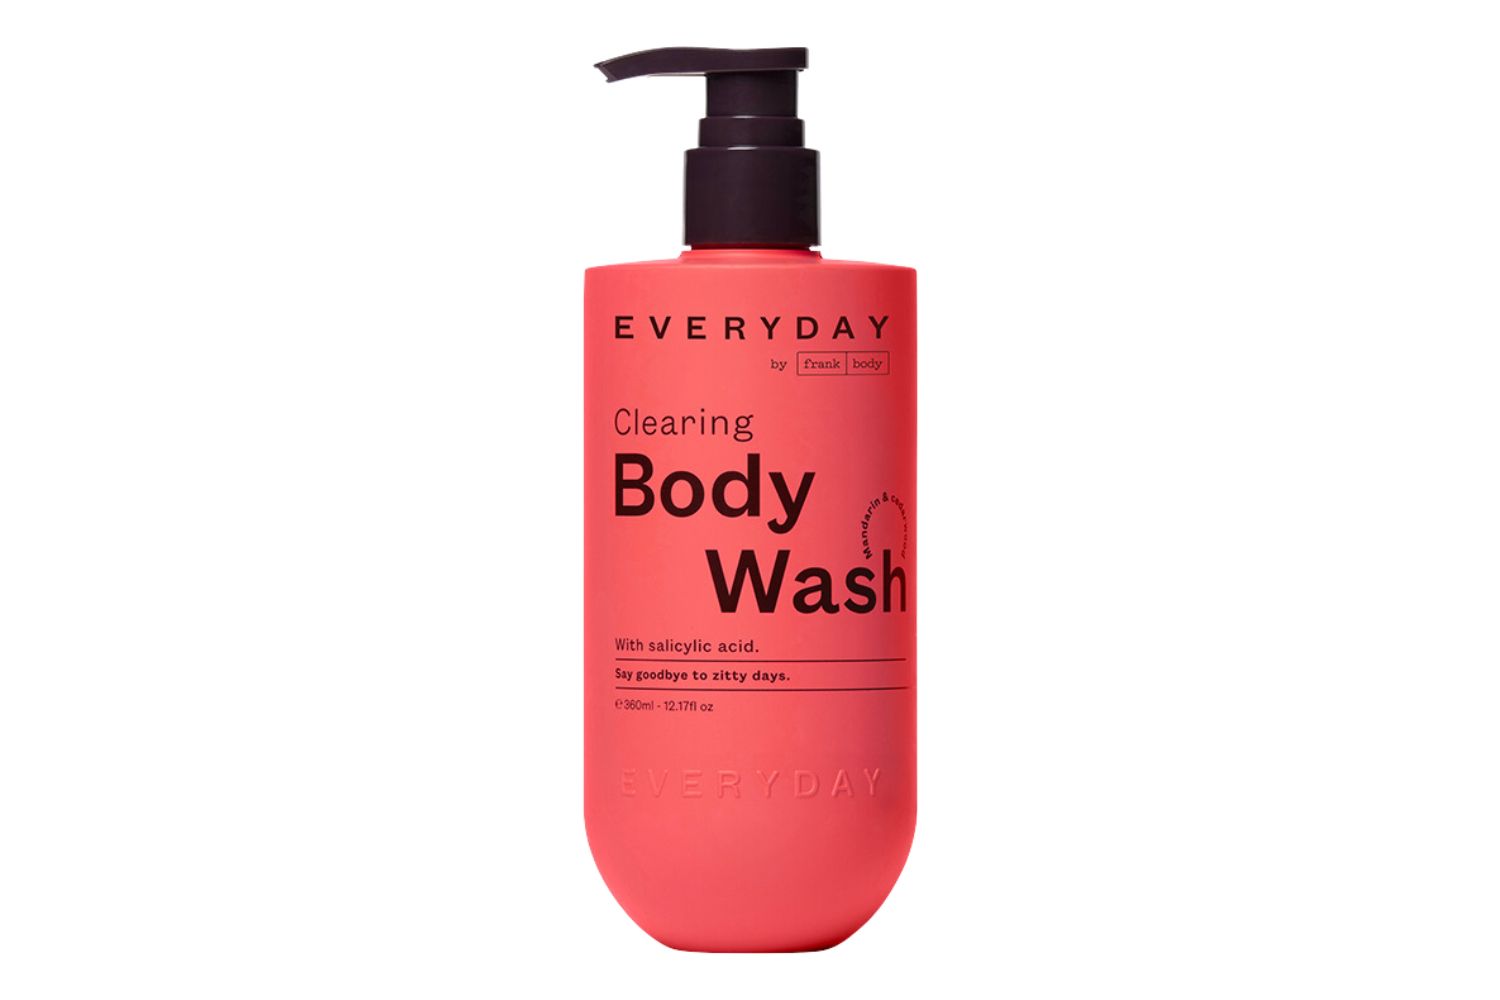 Frank Body clearing body wash